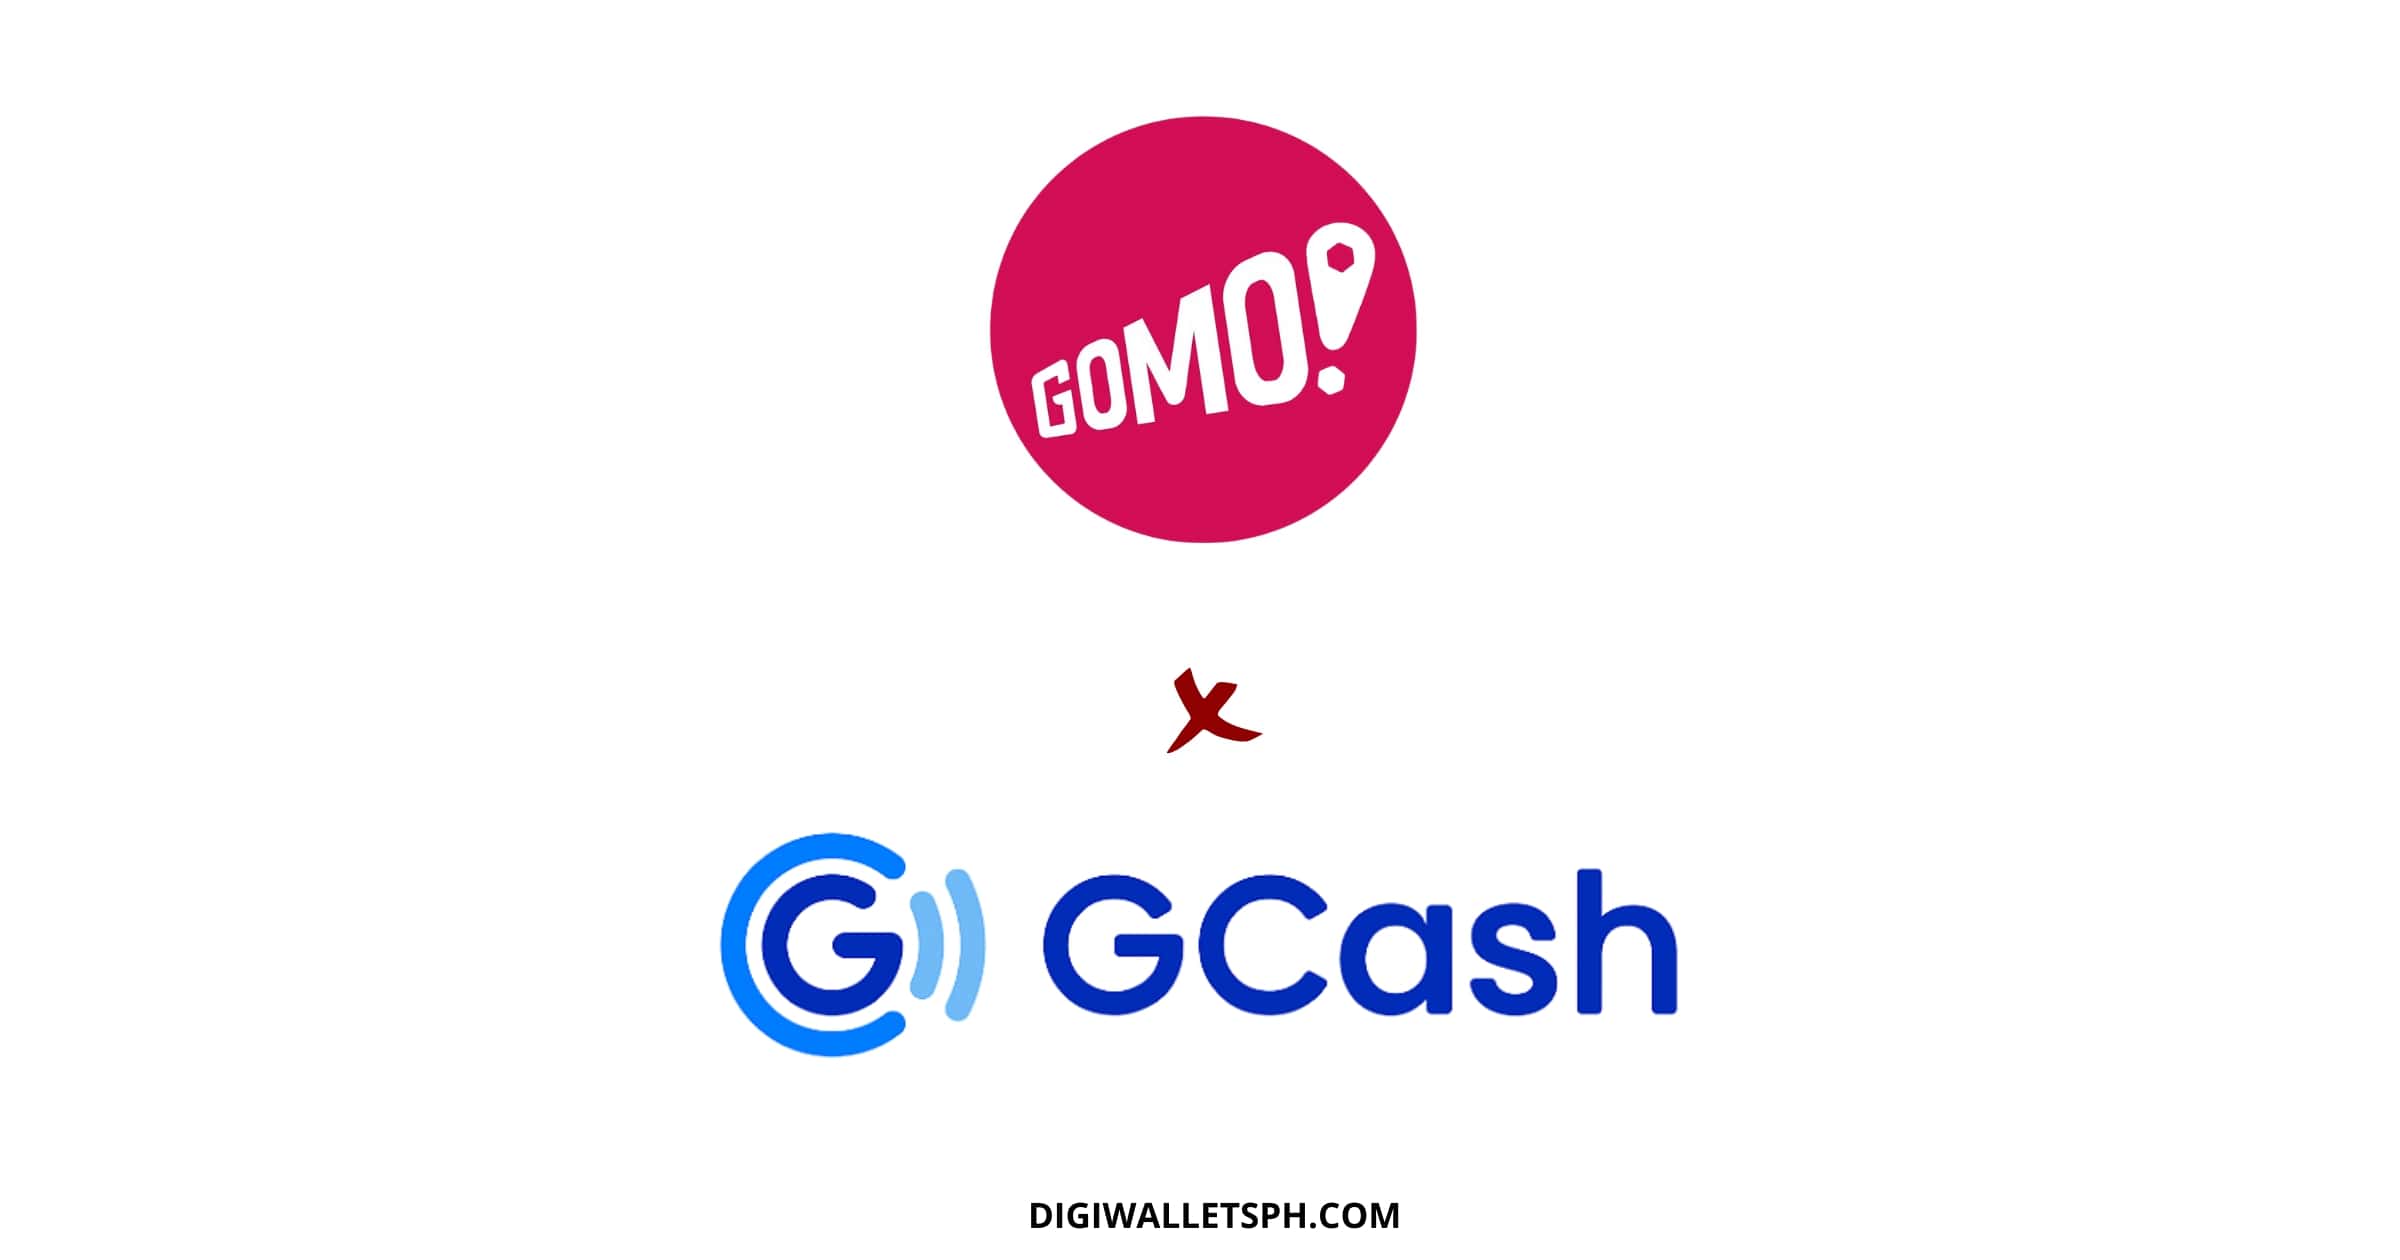 How to load Gomo using GCash